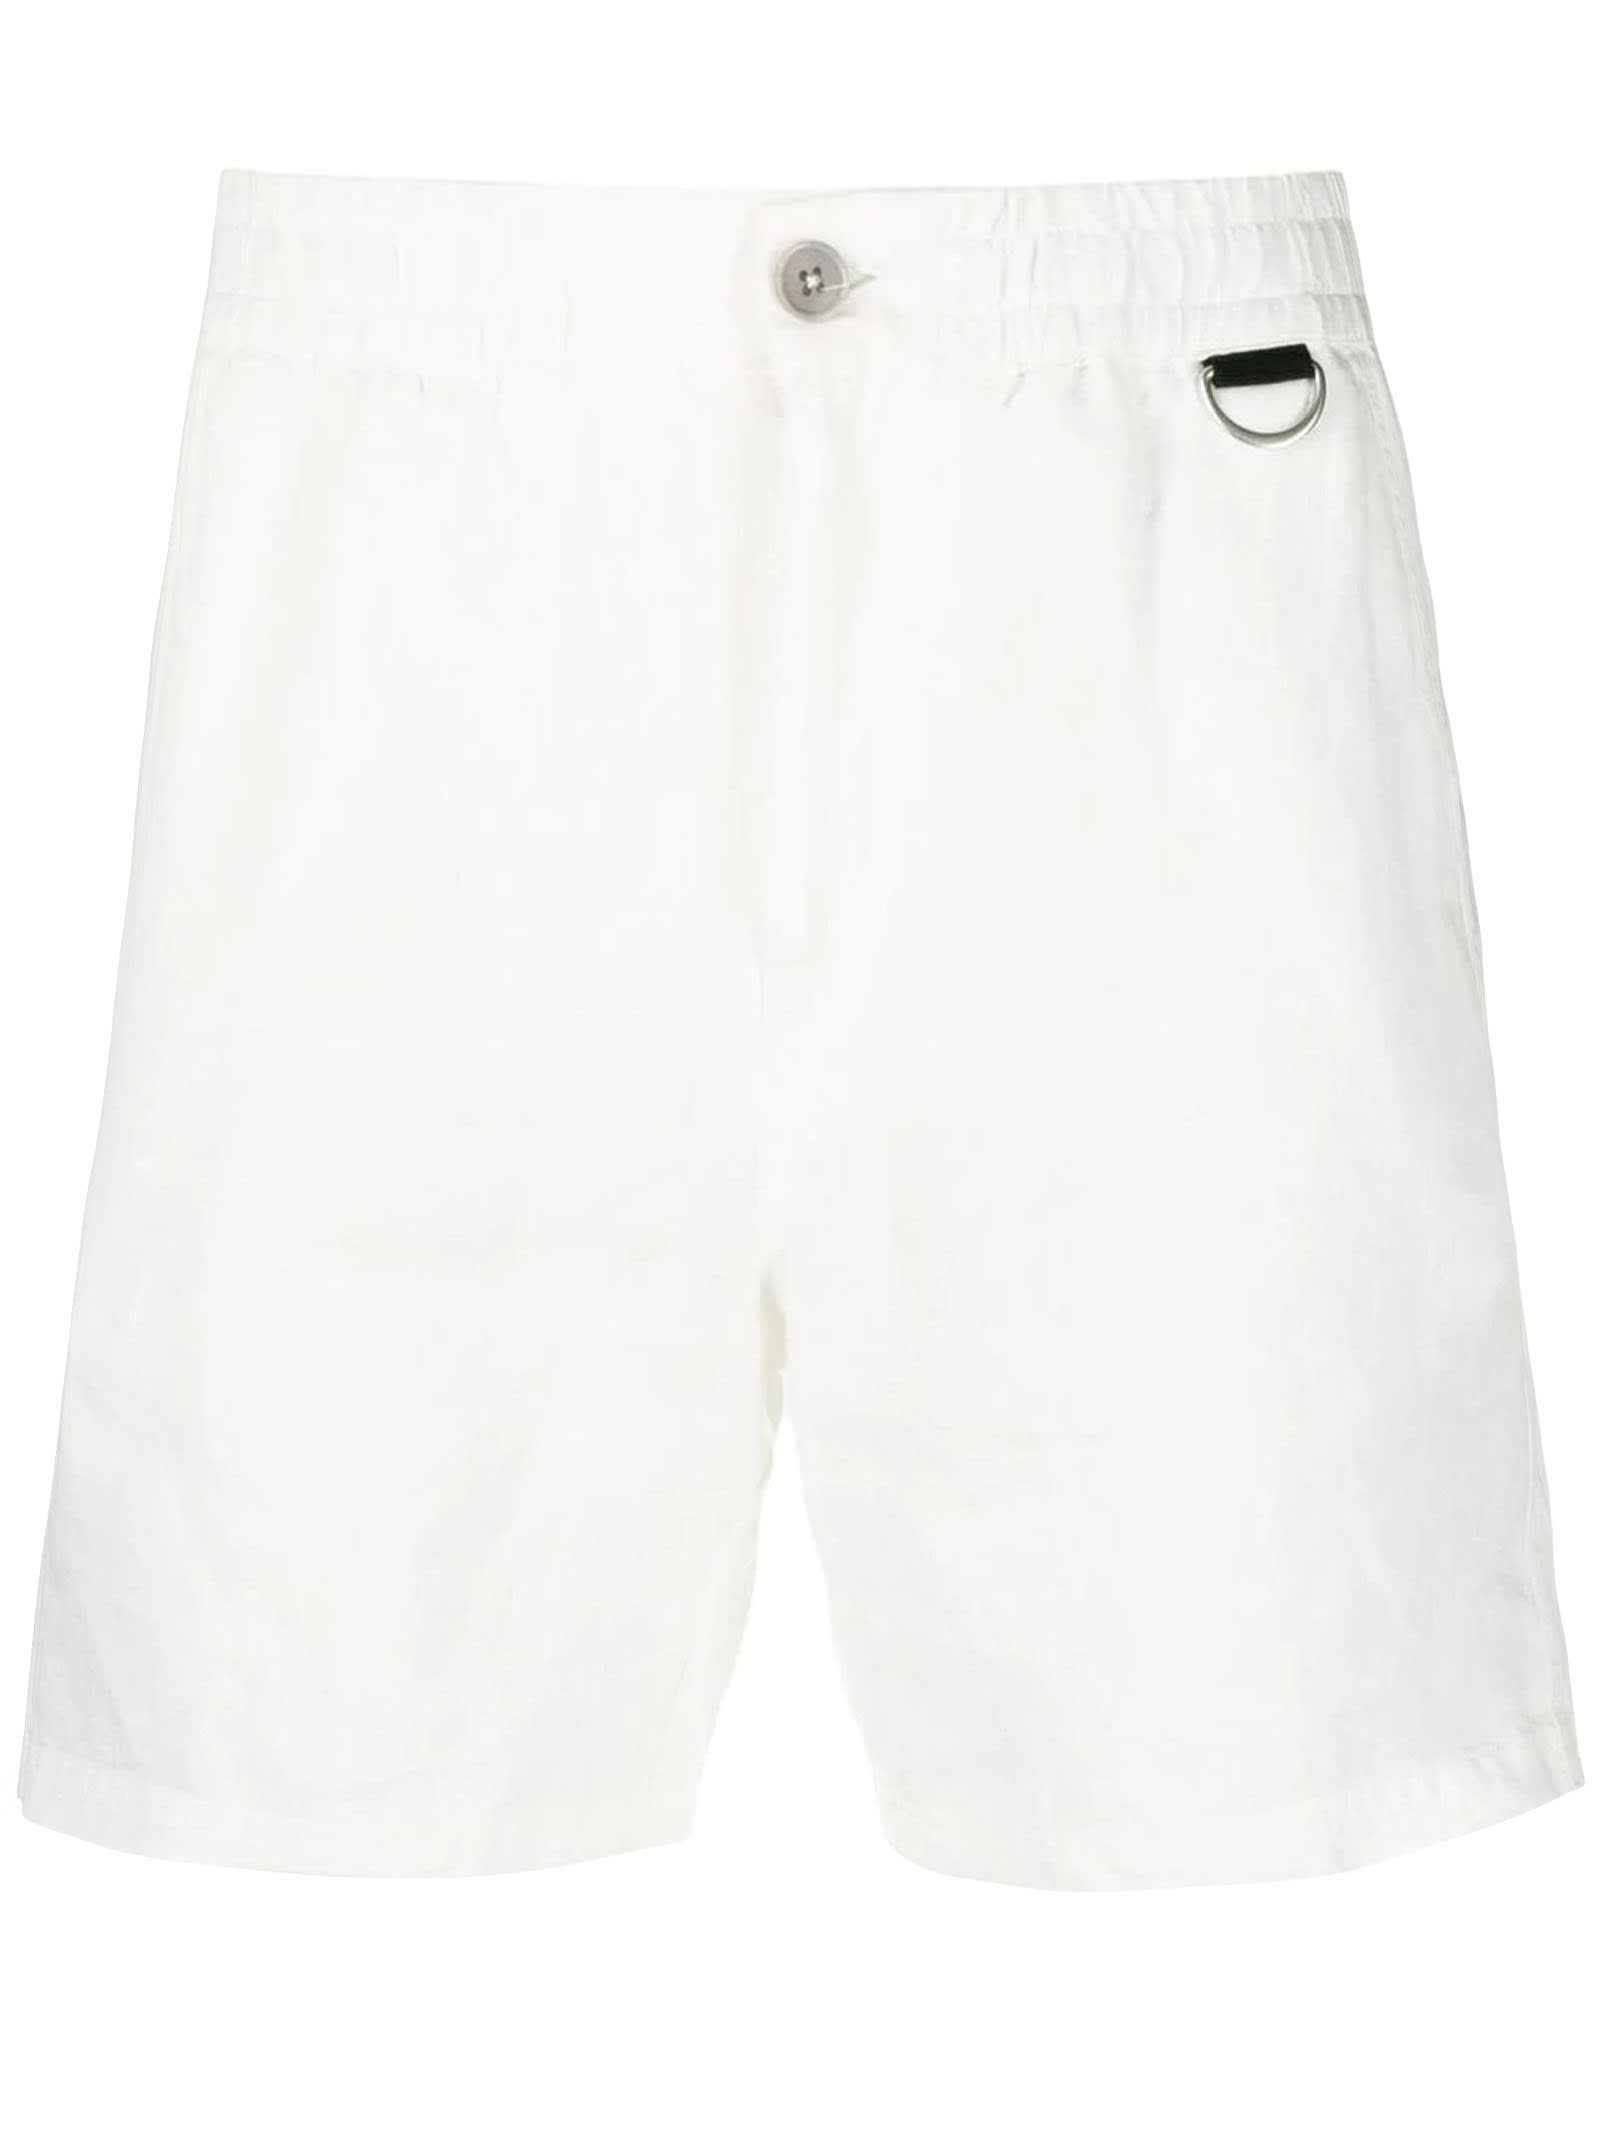 Low Brand White Linen Shorts